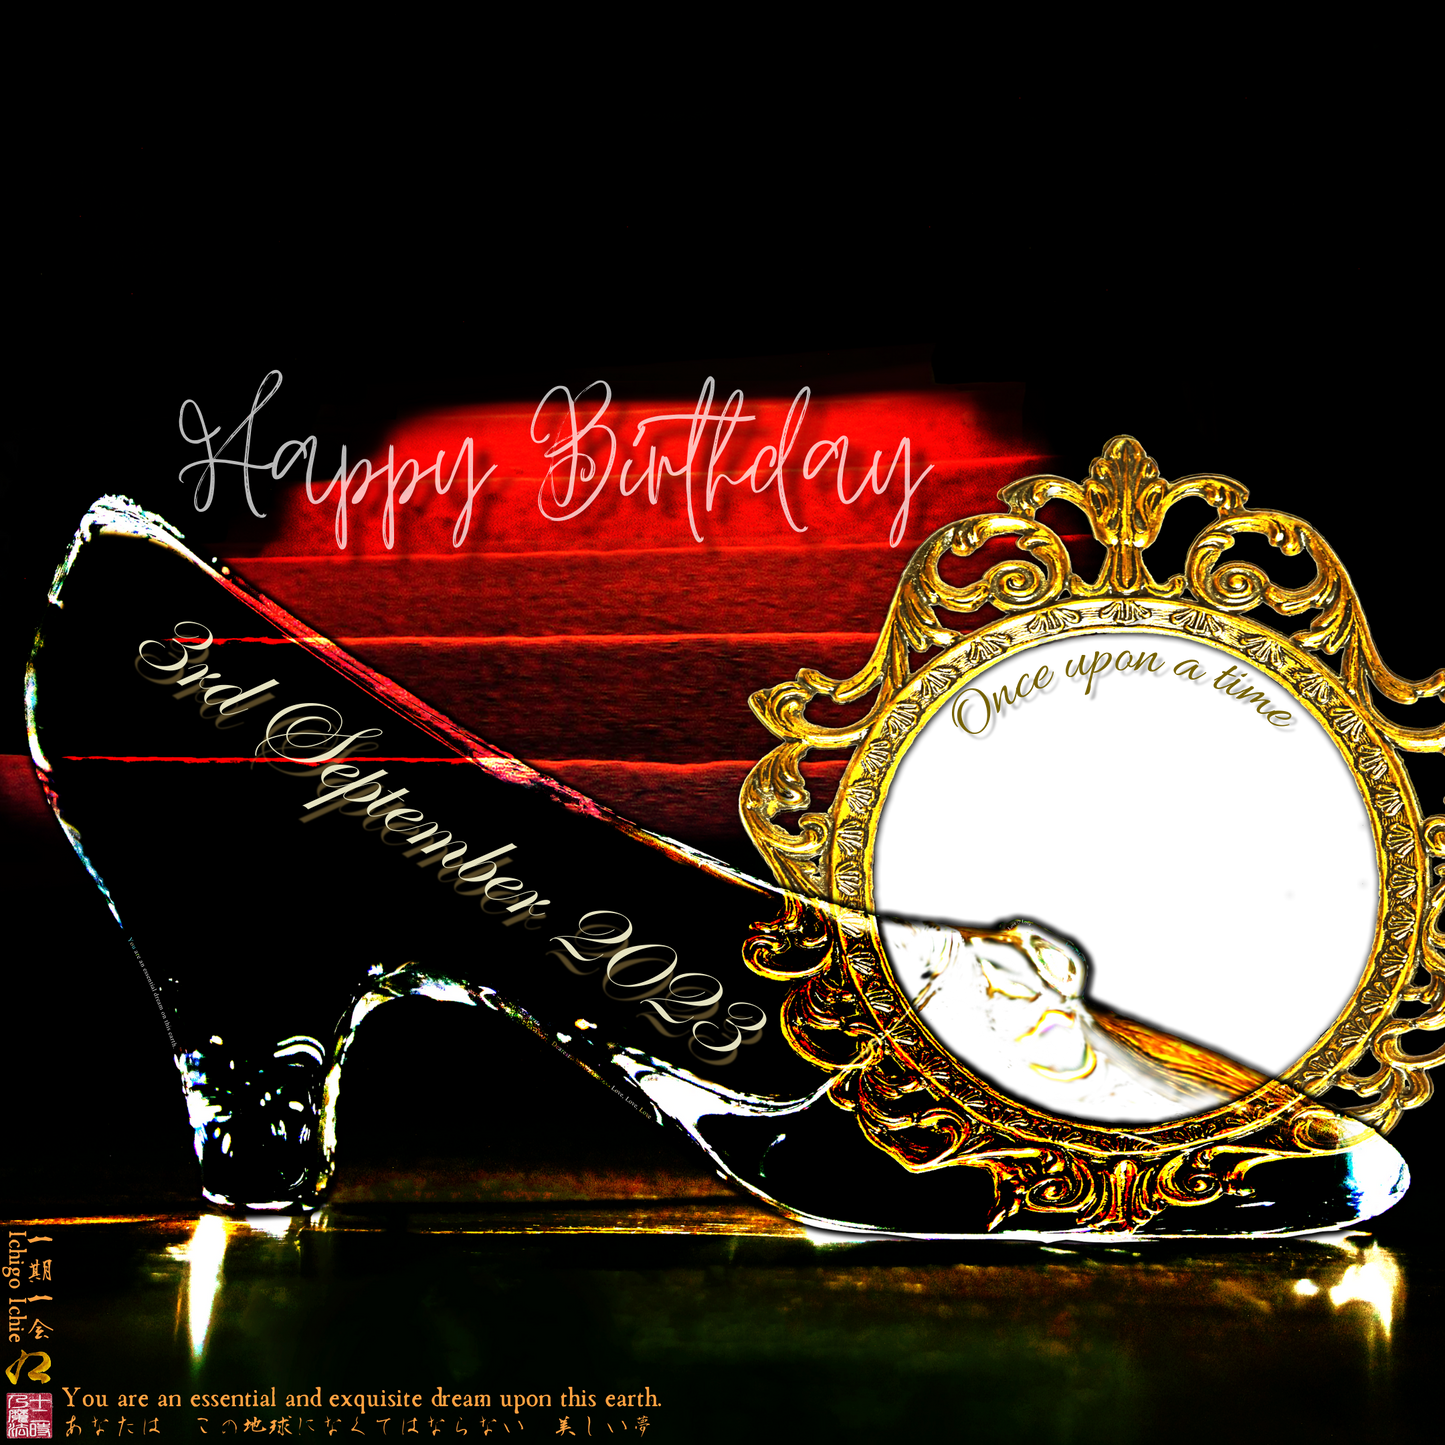 Happy Birthday Glass Slipper "Ichigo Ichie" 3rd September 2023 the Right (1-of-1) NFT Art